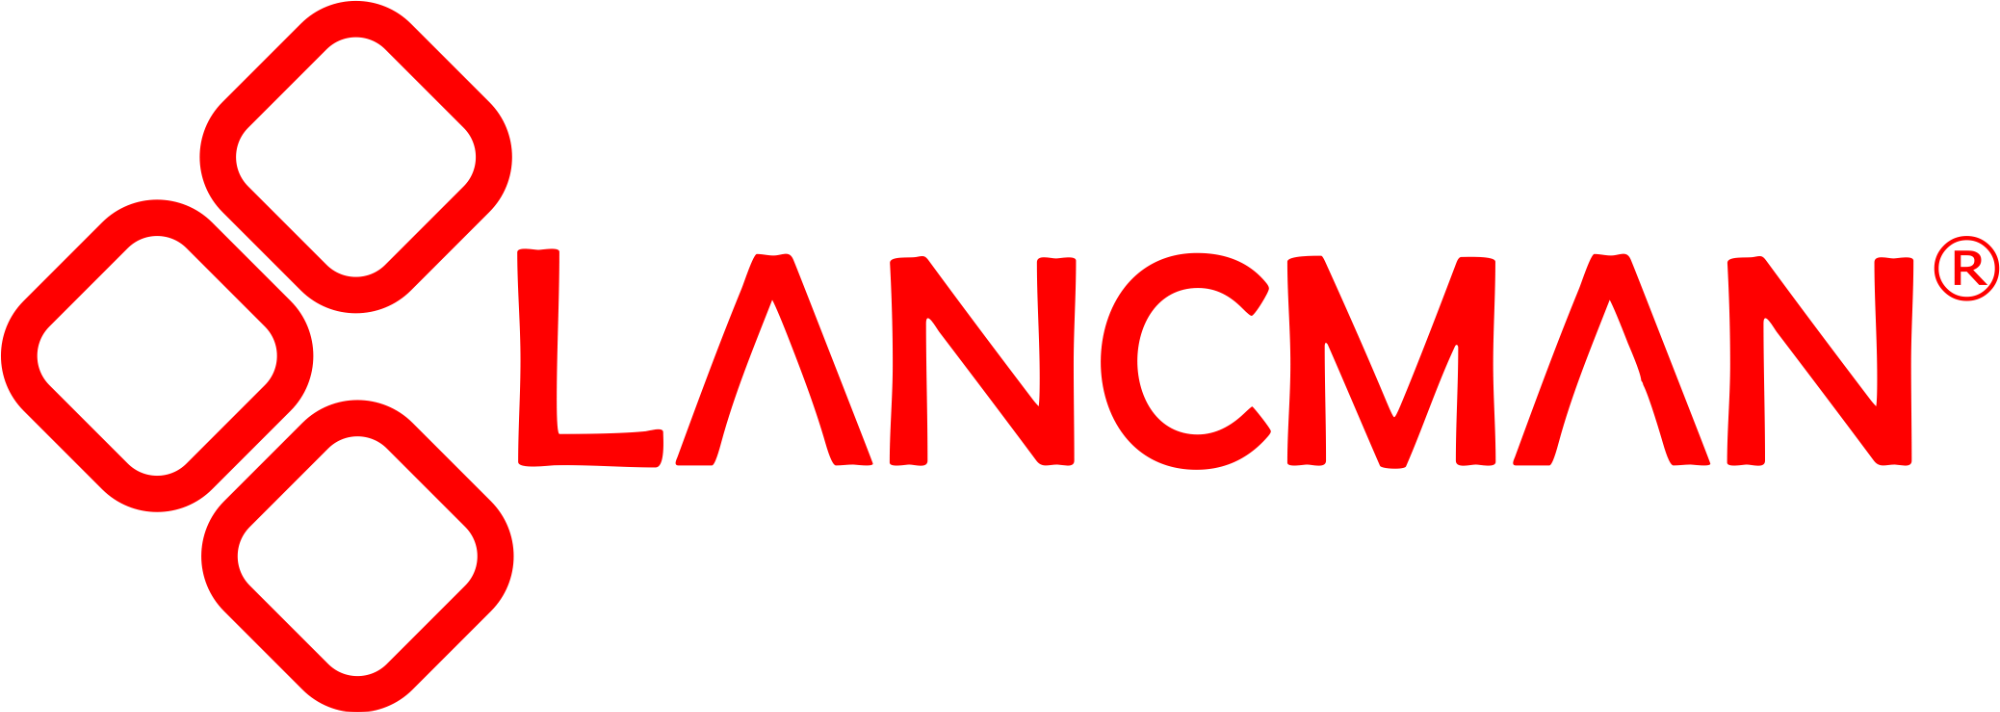 Lancman-2022.png